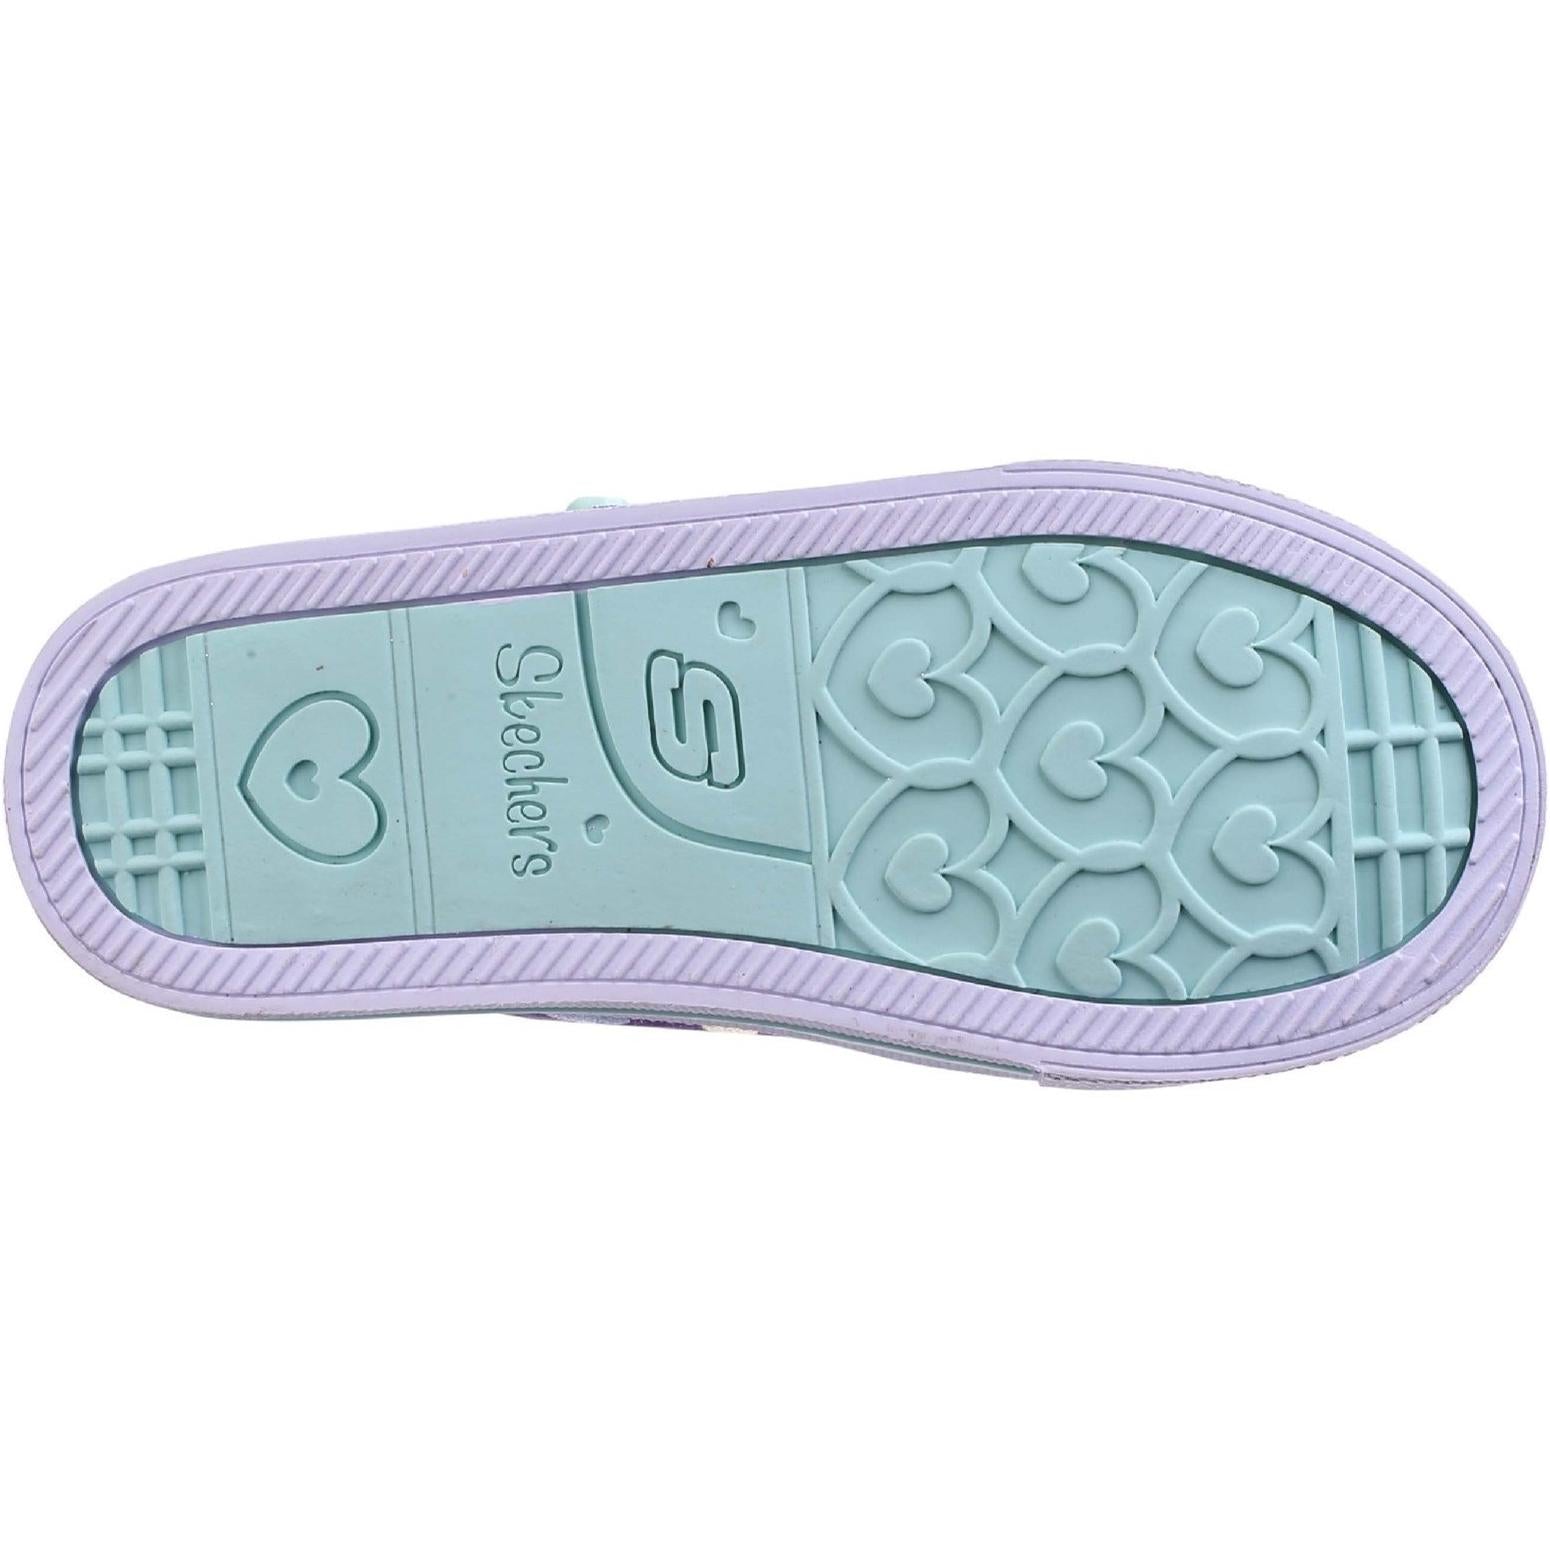 Skechers Twinkle Toes Shuffles - Dazzle Dots Shoes